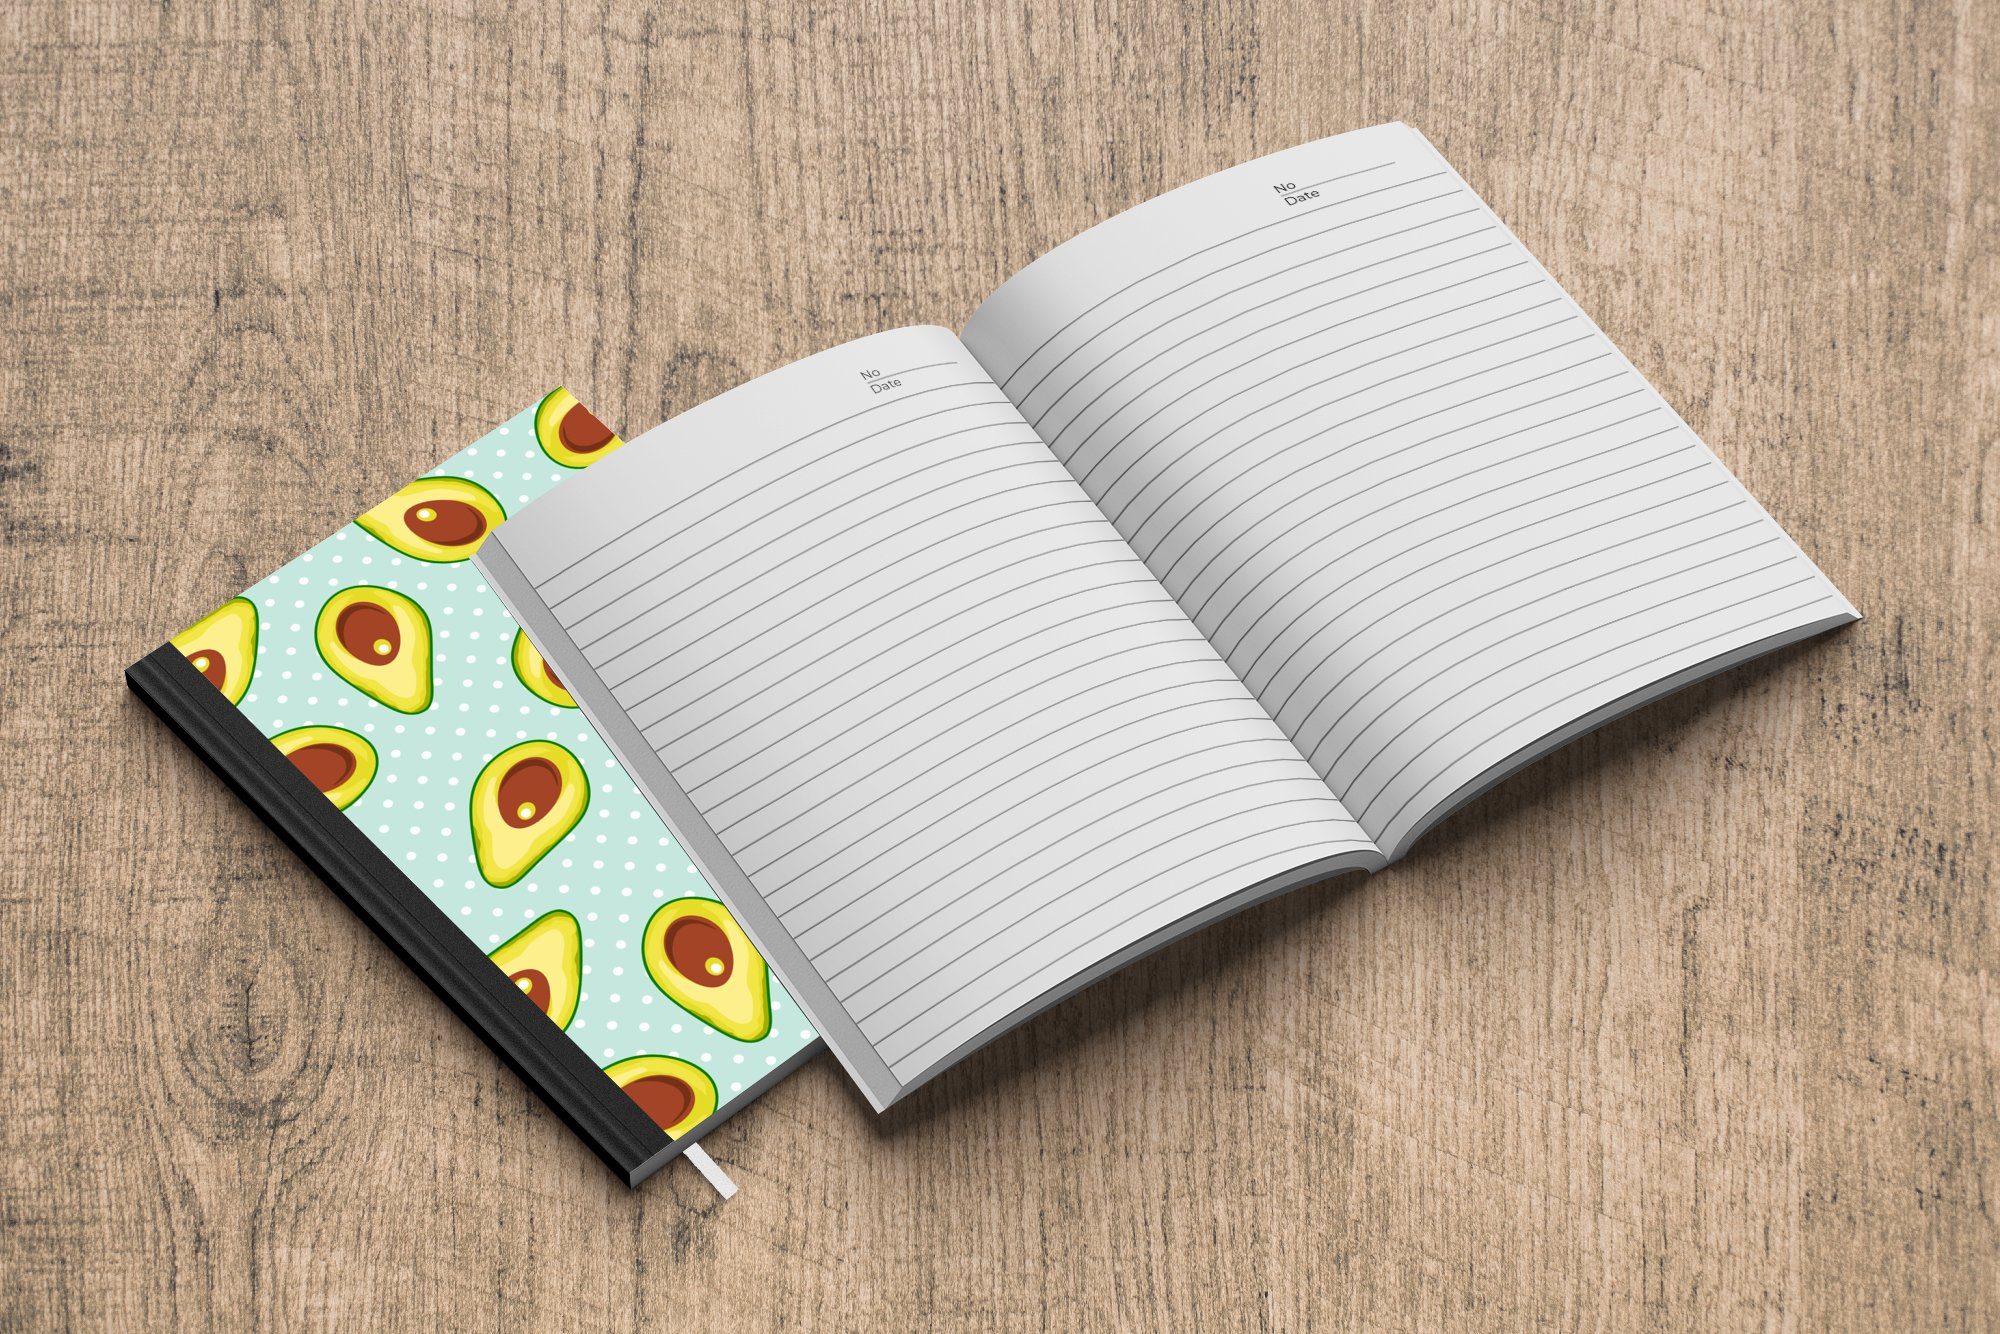 MuchoWow Notizbuch Avocado Notizheft, 98 dots, - Polka - A5, Merkzettel, Muster Haushaltsbuch Tagebuch, Seiten, Journal